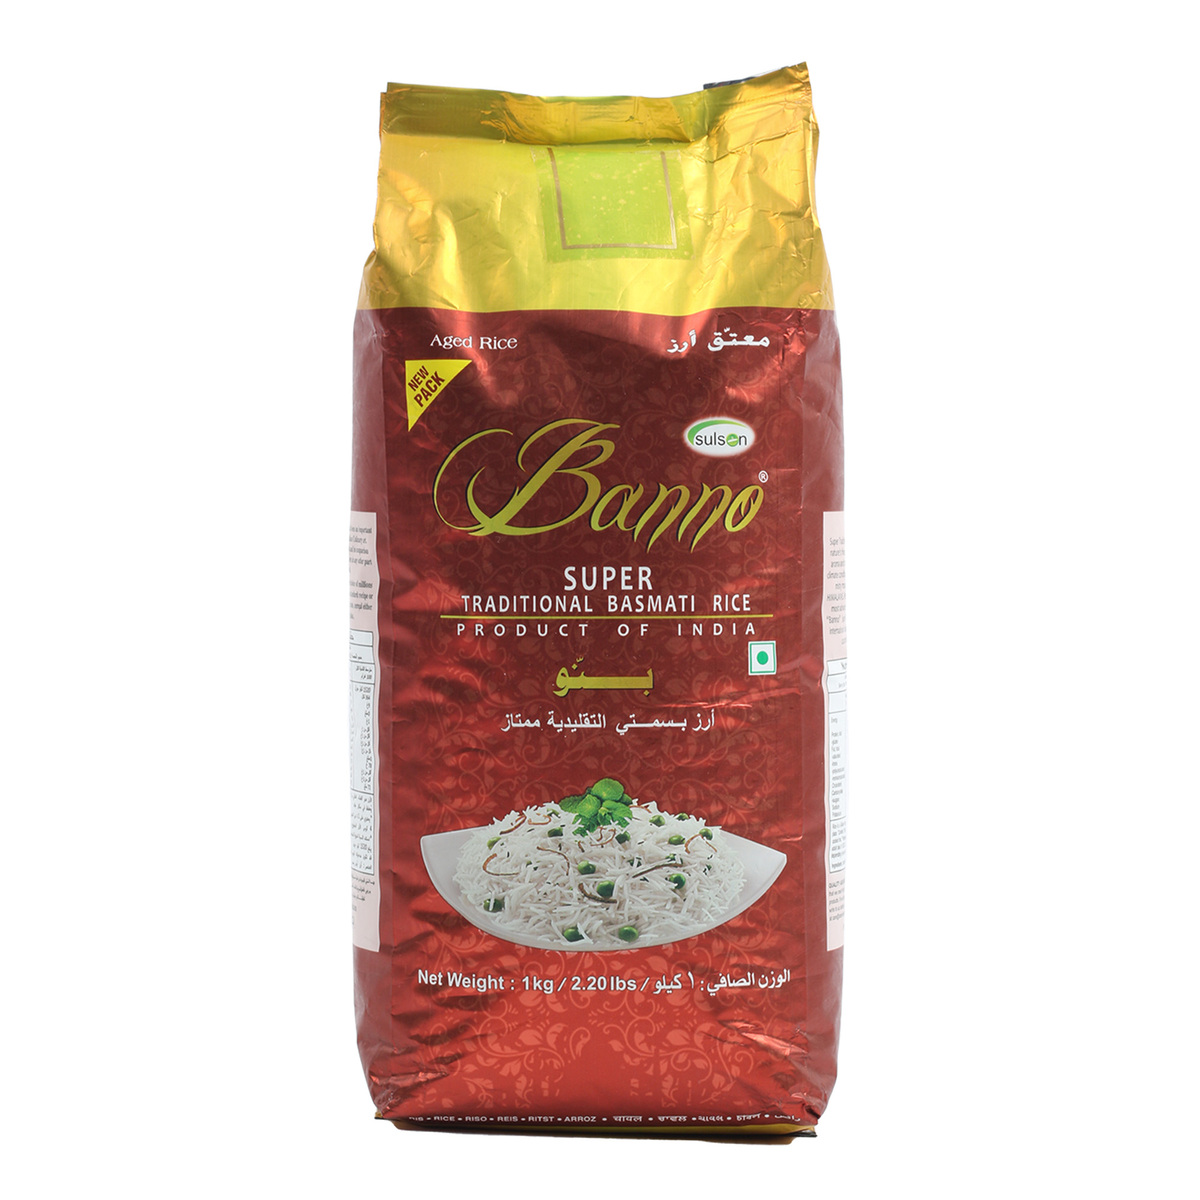 Banno Super Traditional Basmati Rice 1kg